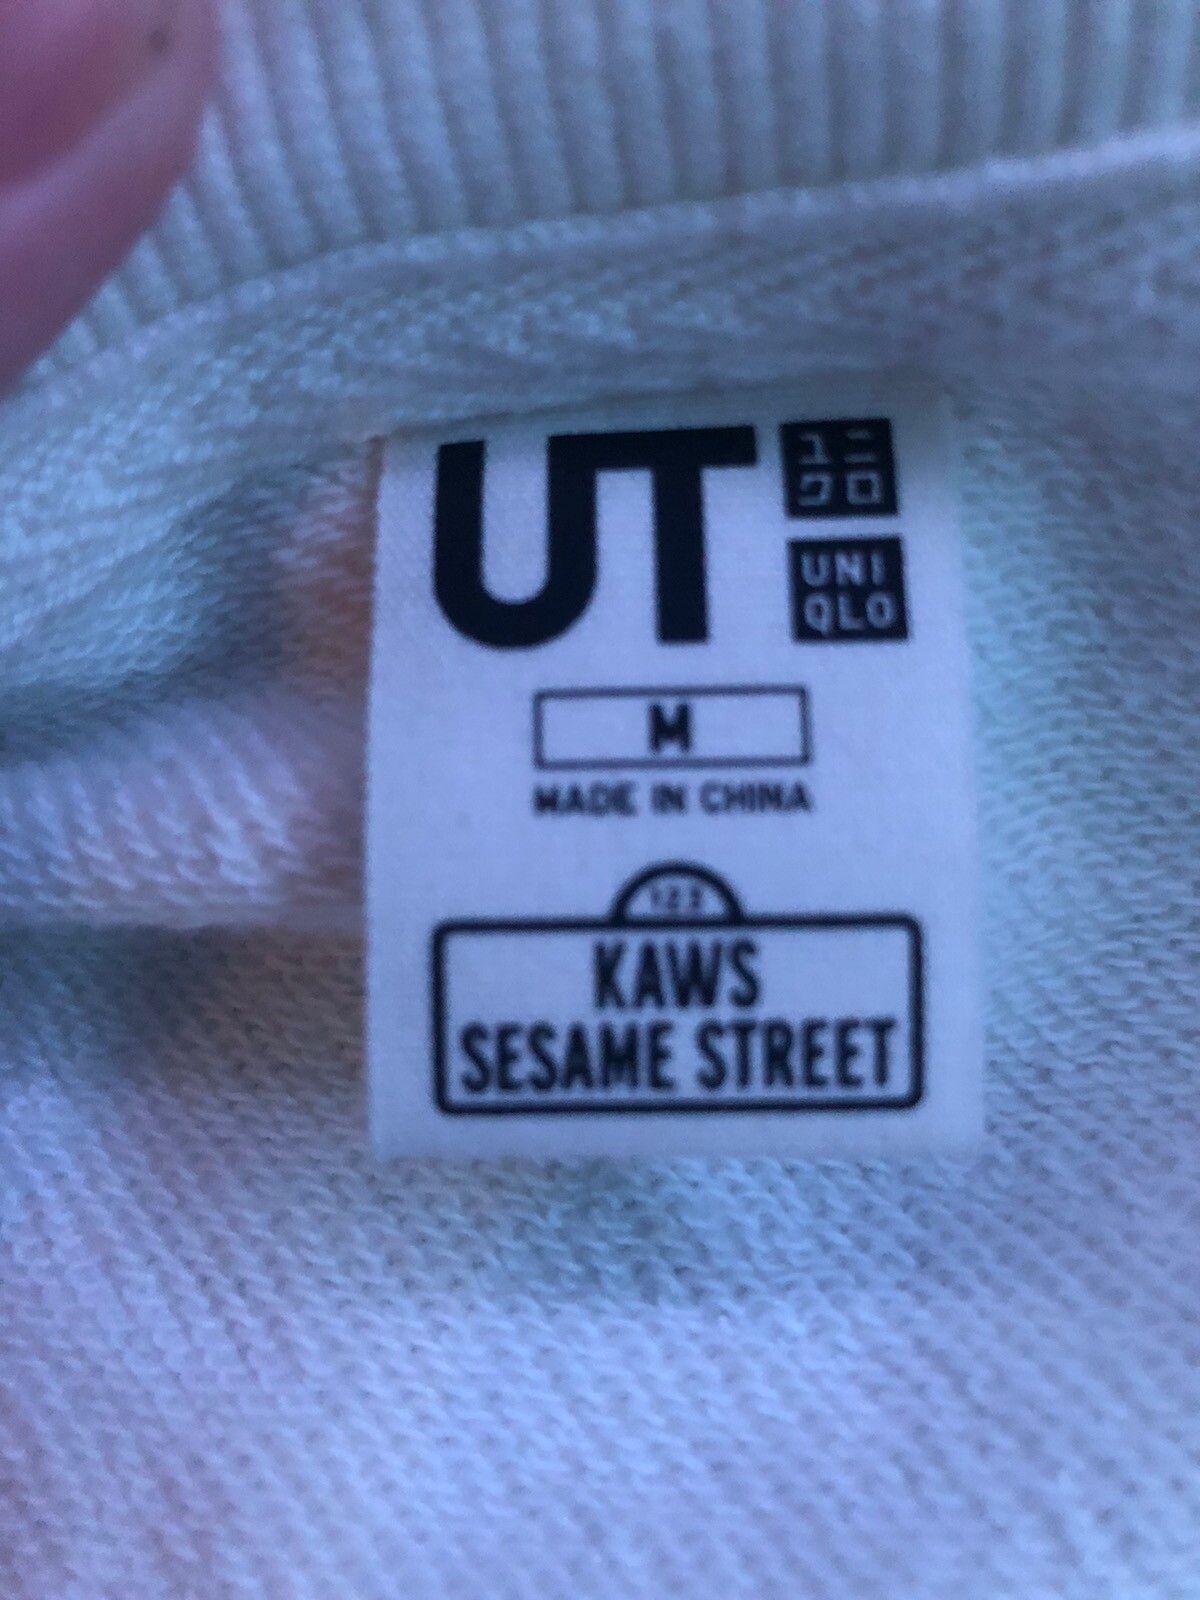 Kaws Kaws x Uniqlo x Sesame Street Group #2 Size US M / EU 48-50 / 2 - 2 Preview